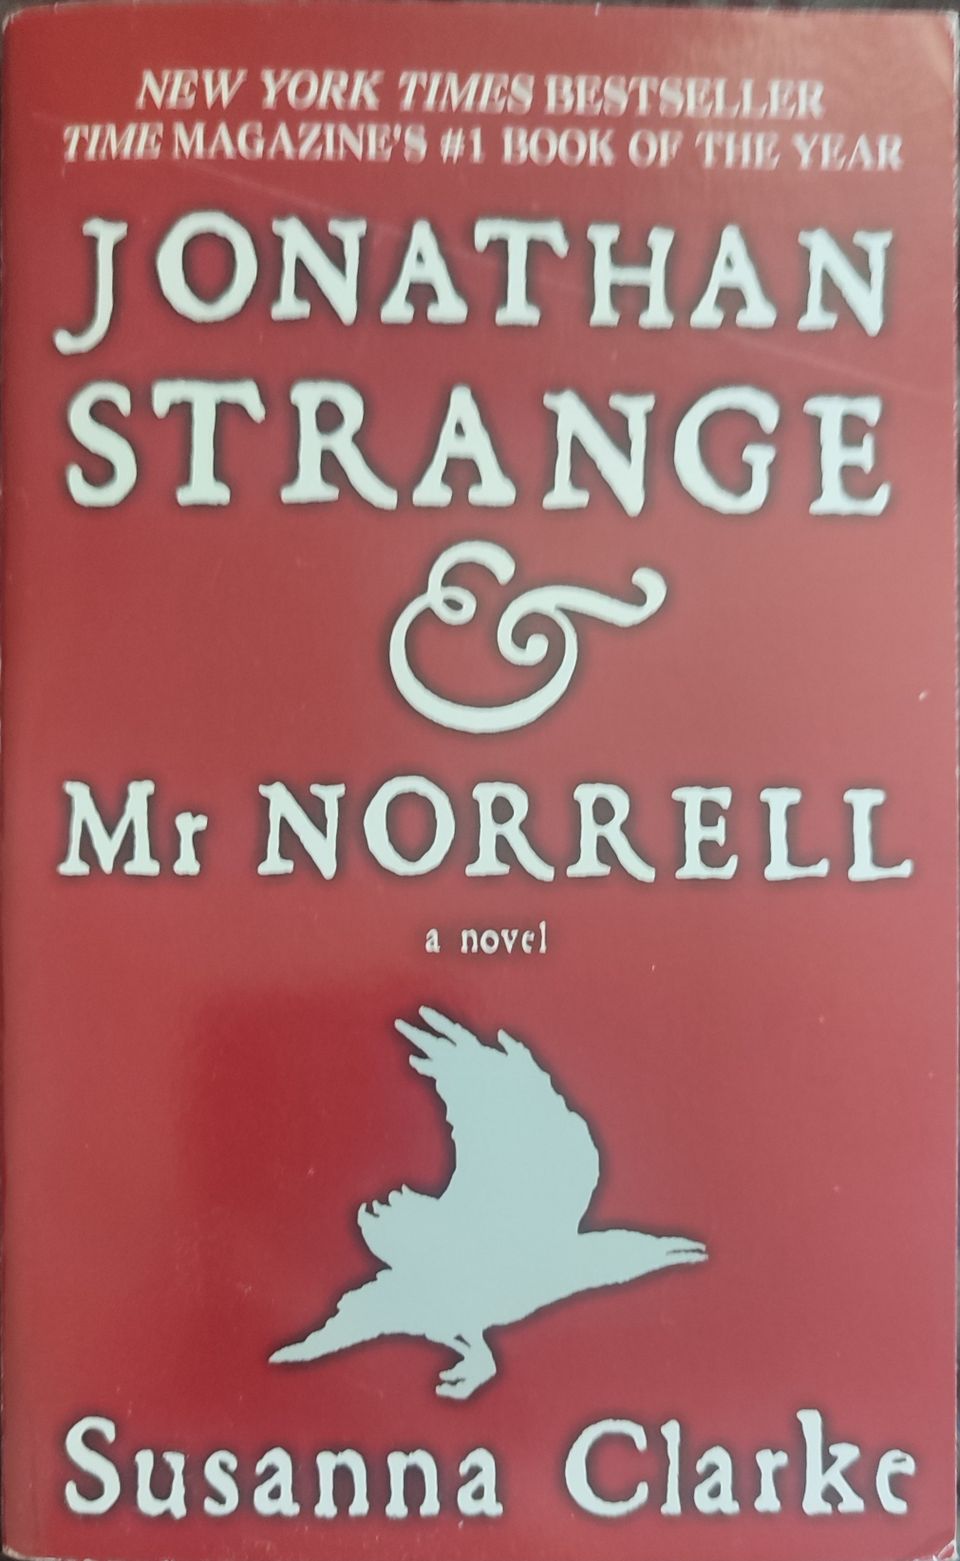 Jonathan Strange & Mr Norrell, Susanna Clarke